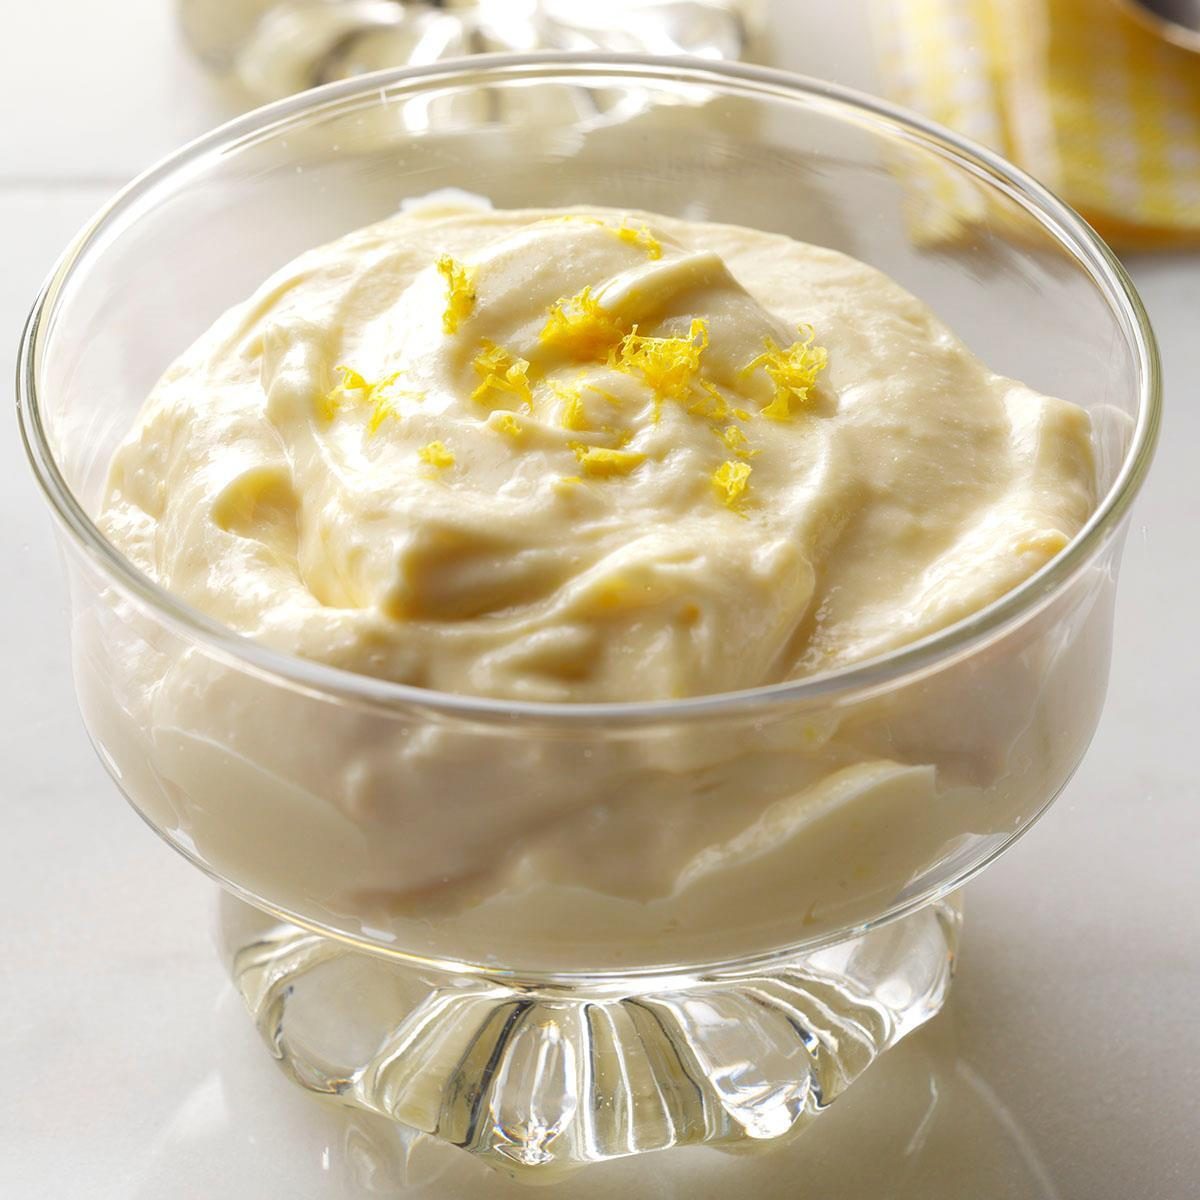 Lemon Cream Delight Recipe: How to Make It